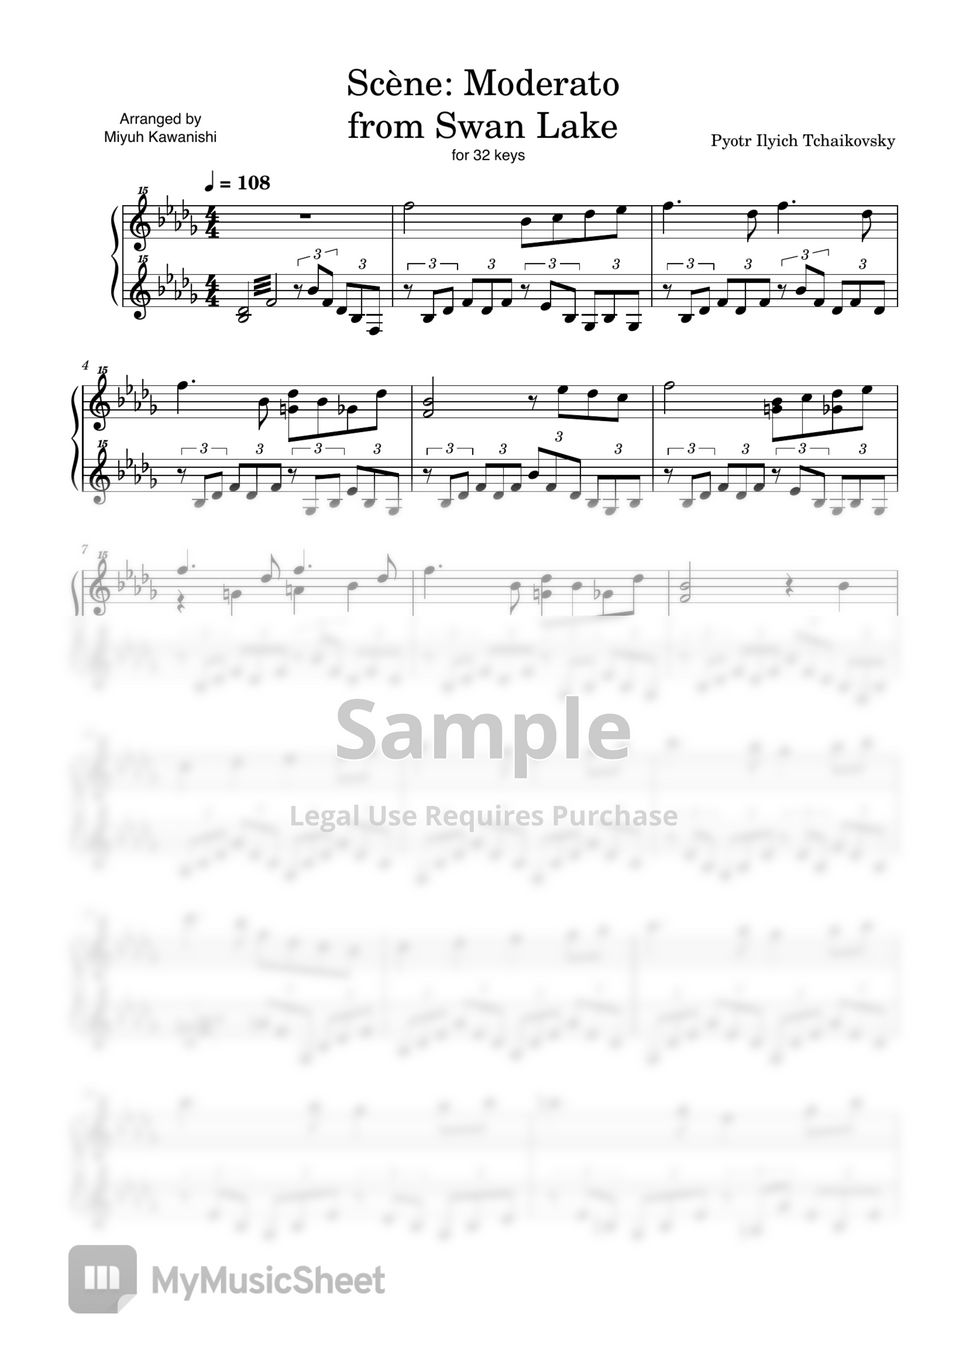 Tchaikovsky - Swan Lake (piano / toy piano / 32 keys) by Miyuh Kawanishi